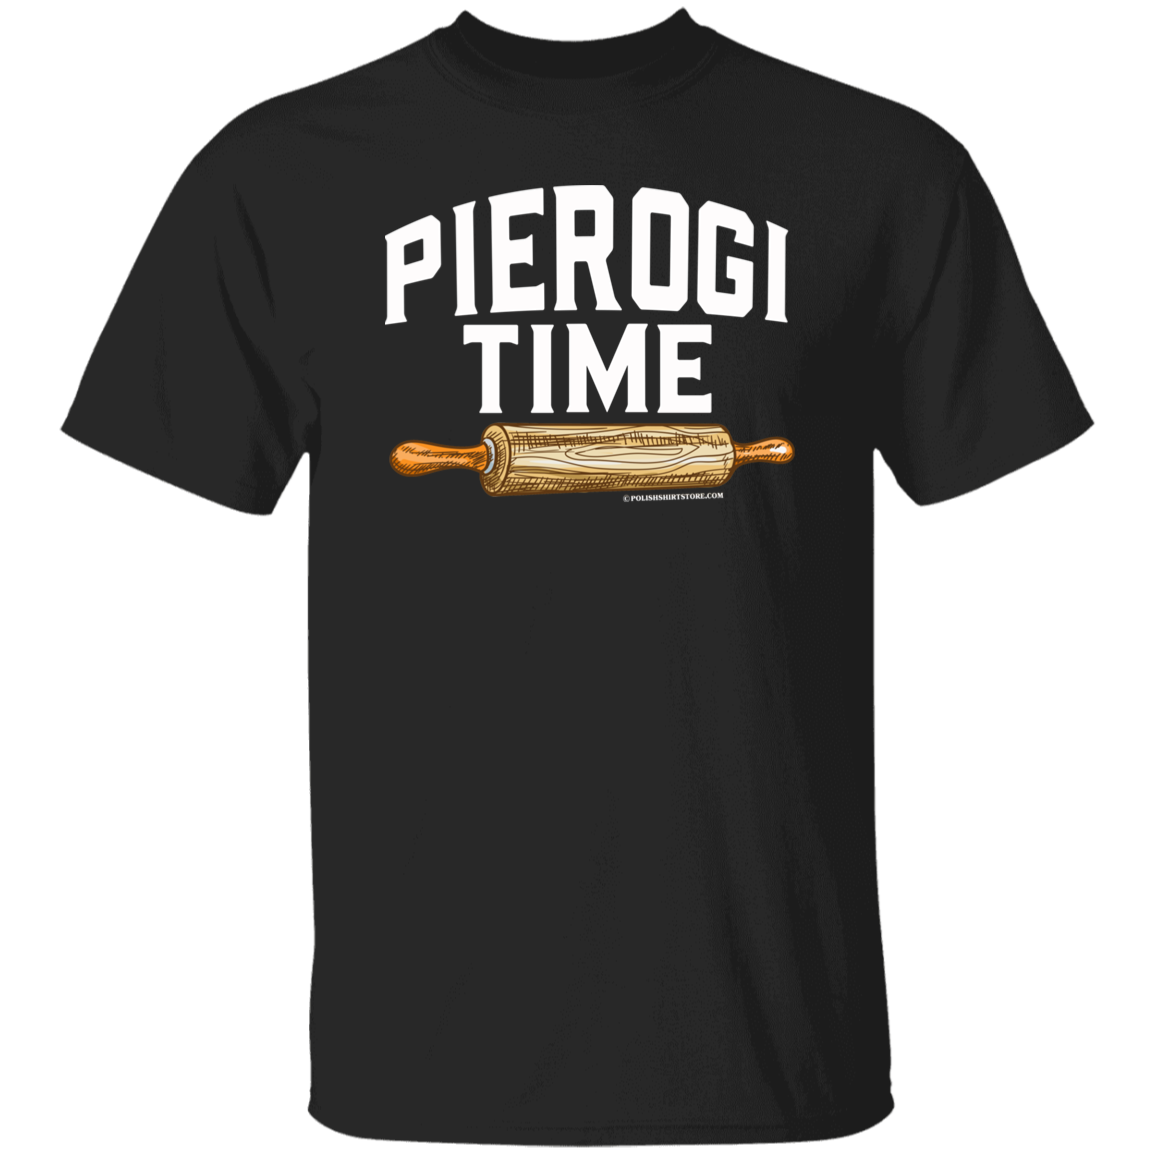 Pierogi Time Apparel CustomCat G500 5.3 oz. T-Shirt Black S